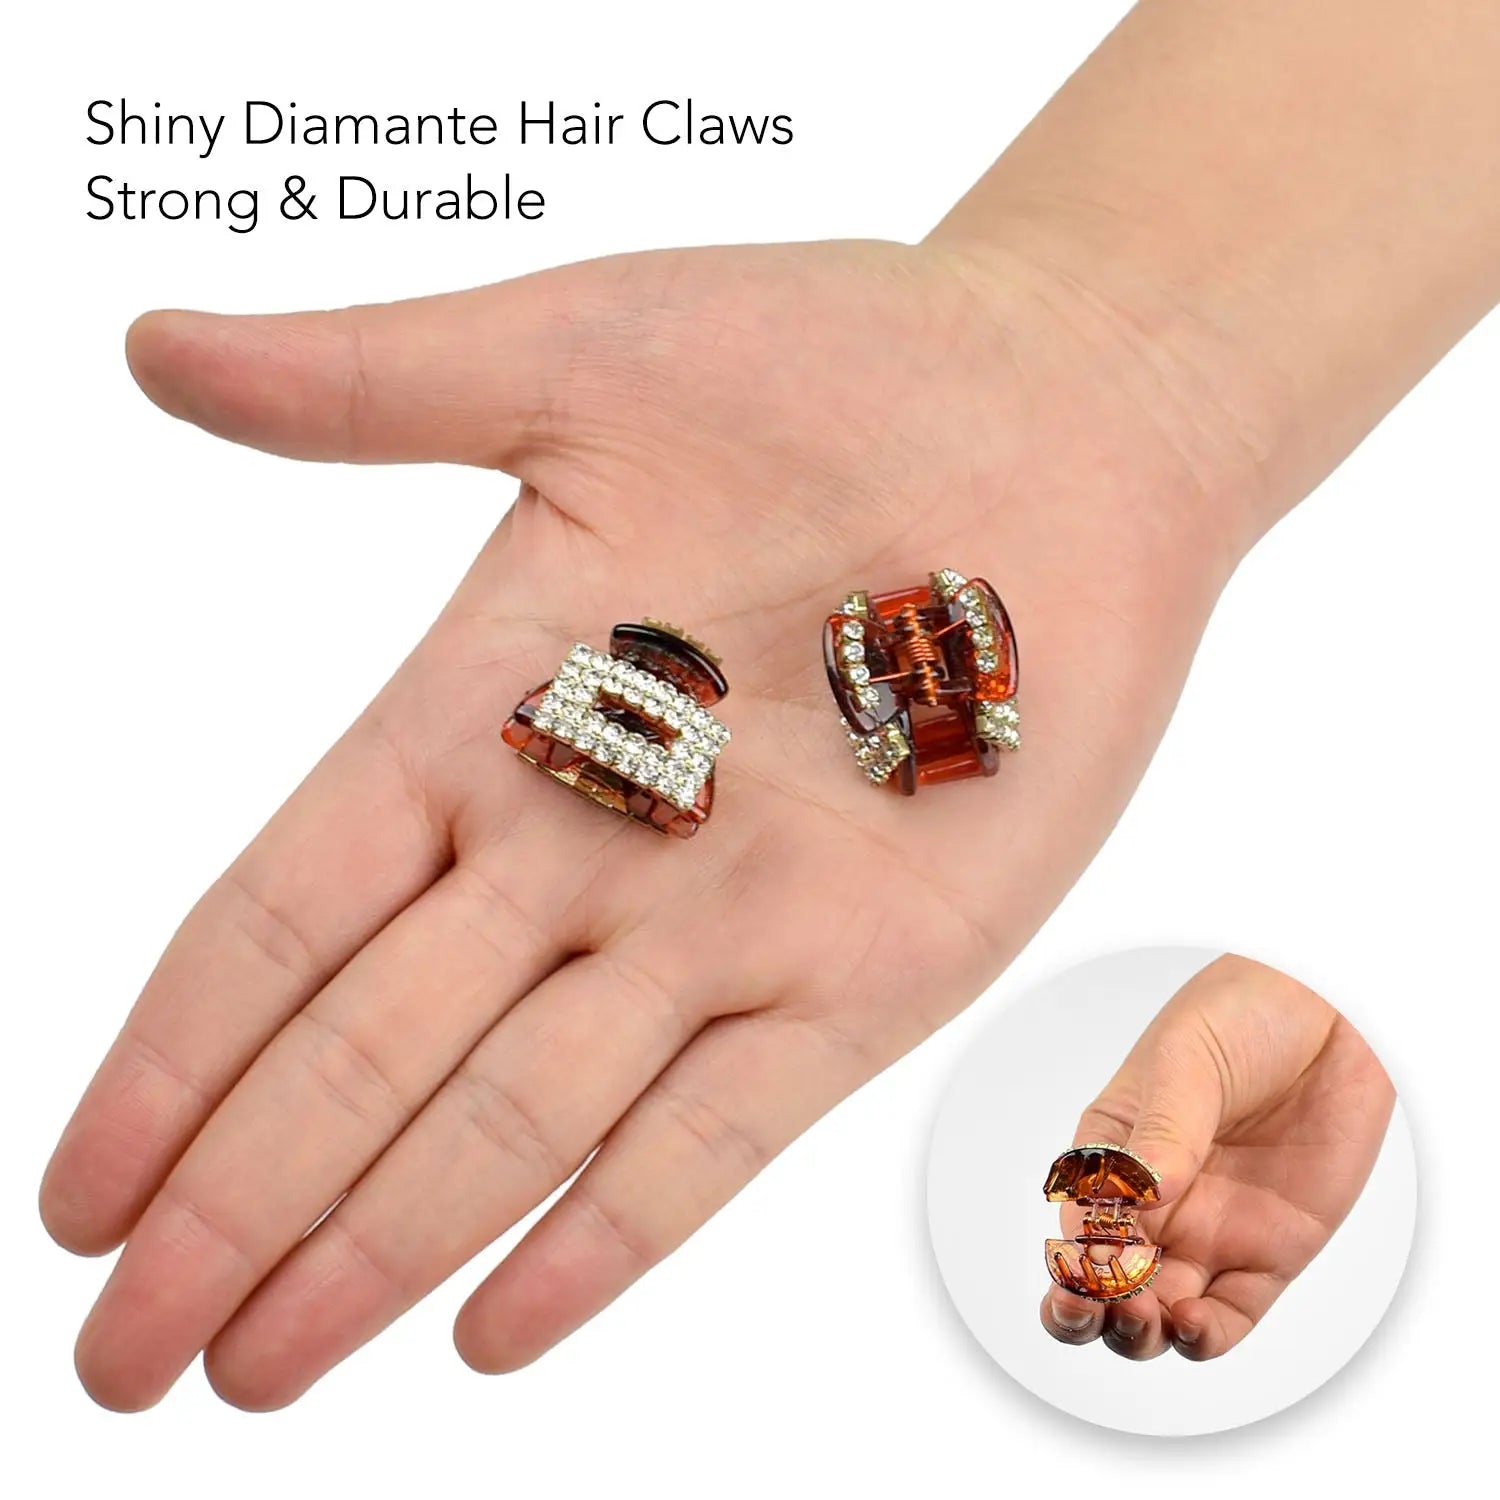 Diamante crystal hair claw rings being held in hand